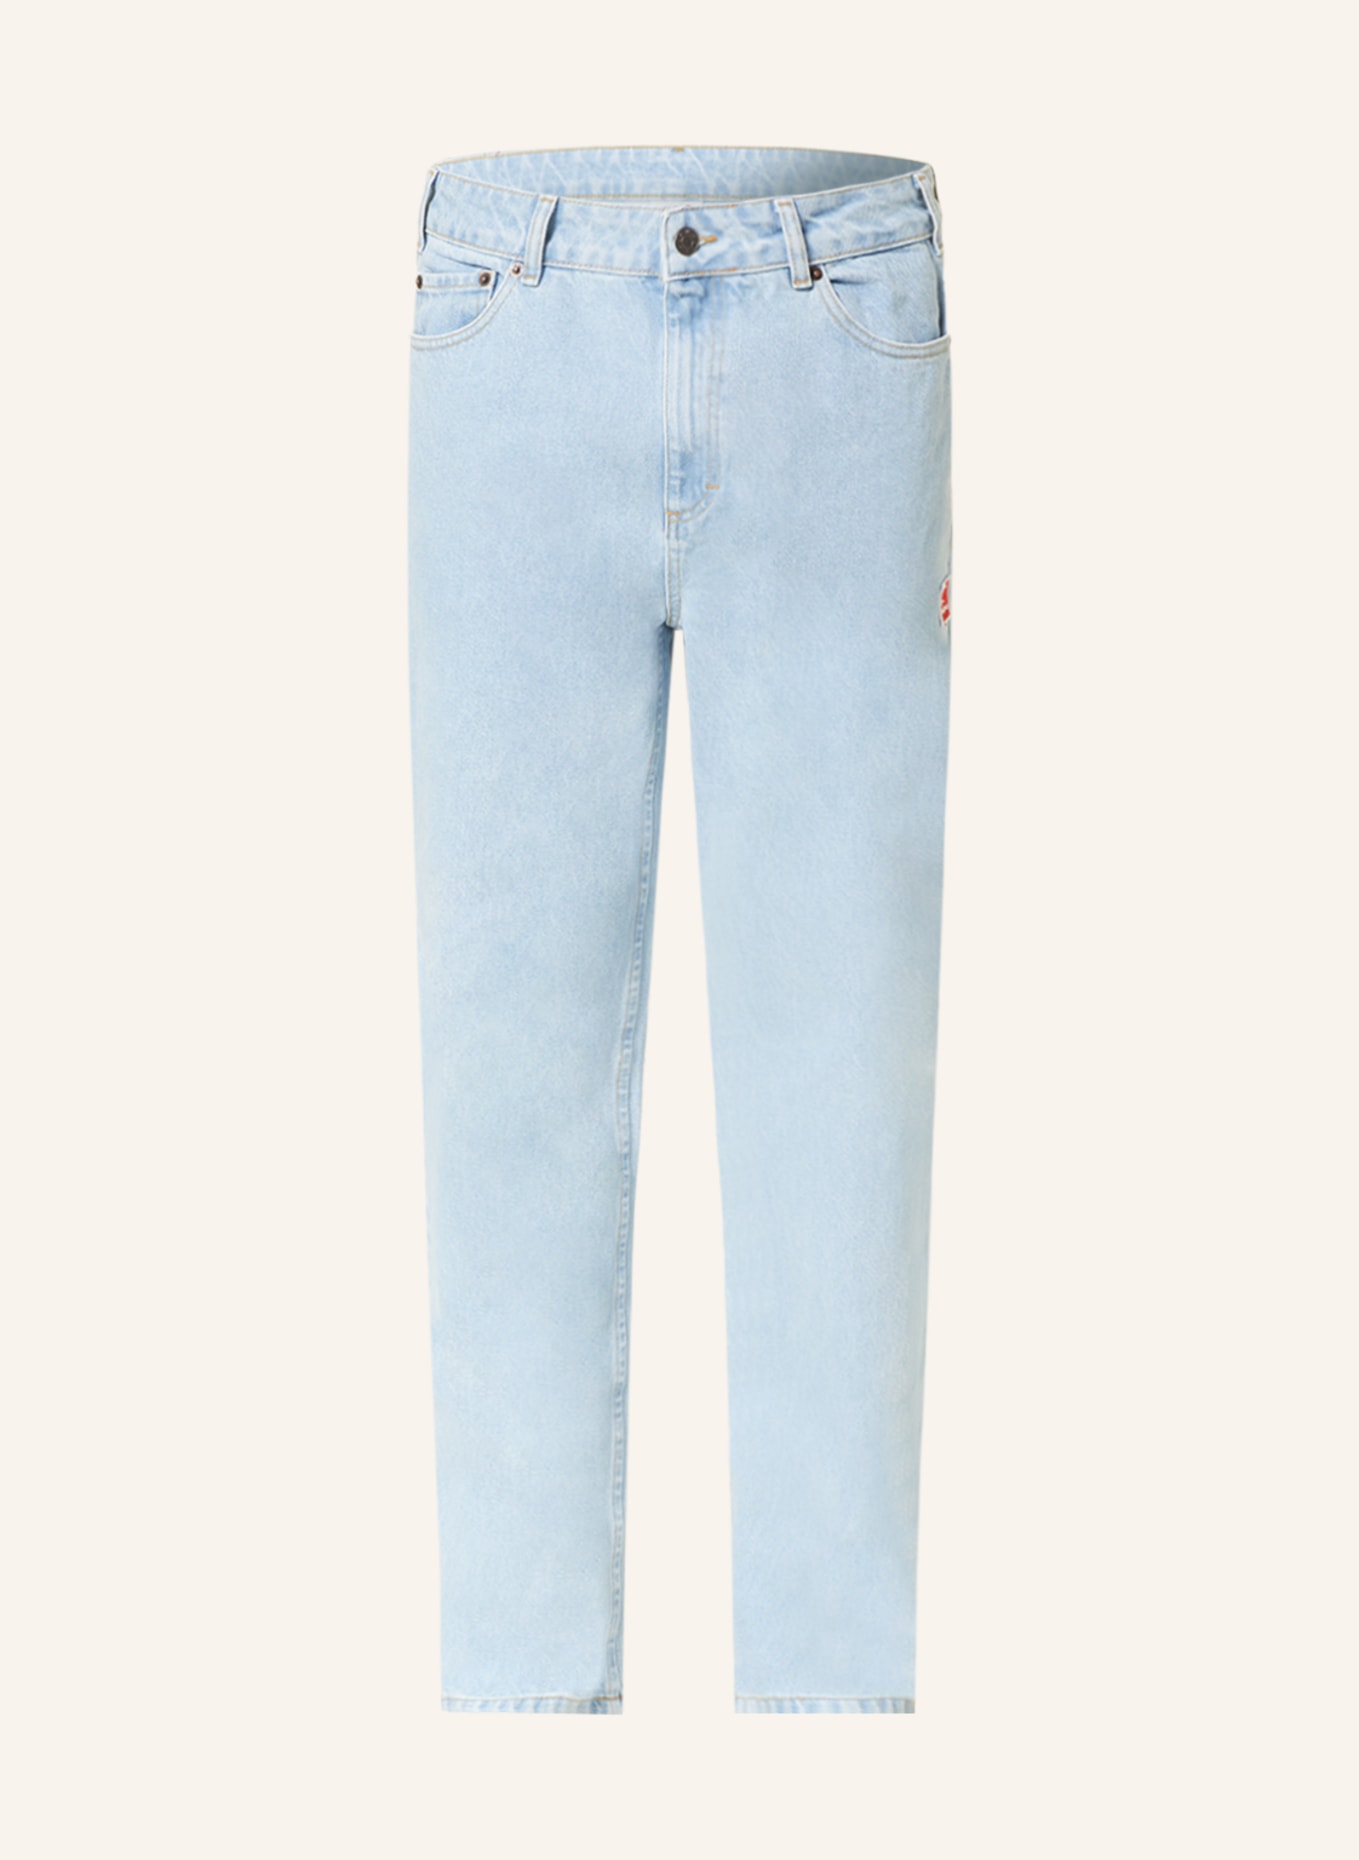 THE NEW ORIGINALS Jeans Straight Fit, Farbe: LDE Light Wash (Bild 1)